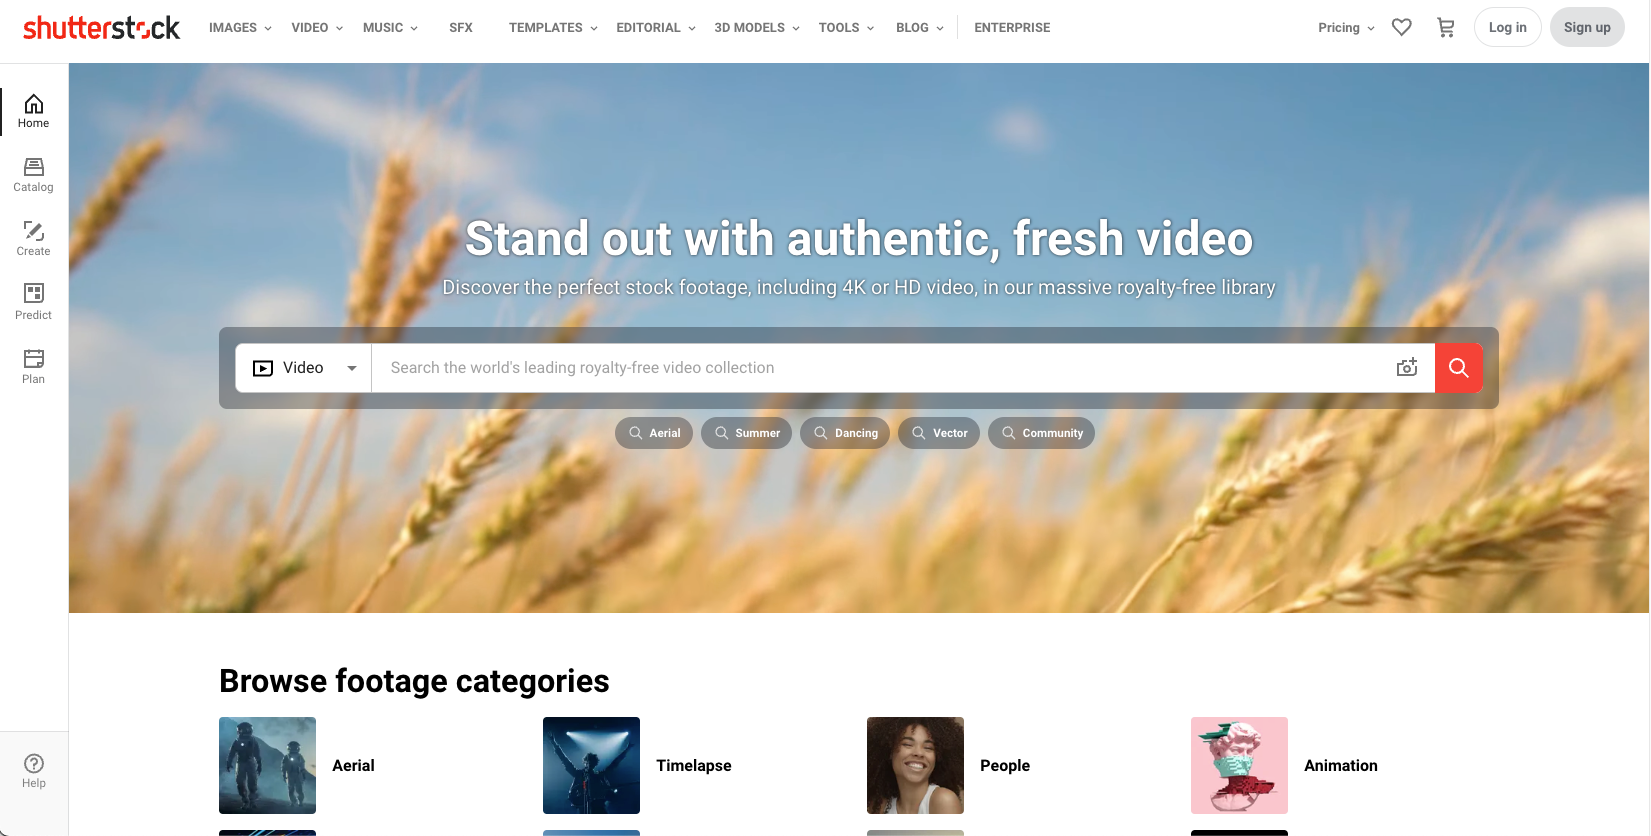 Shutterstock Homepage